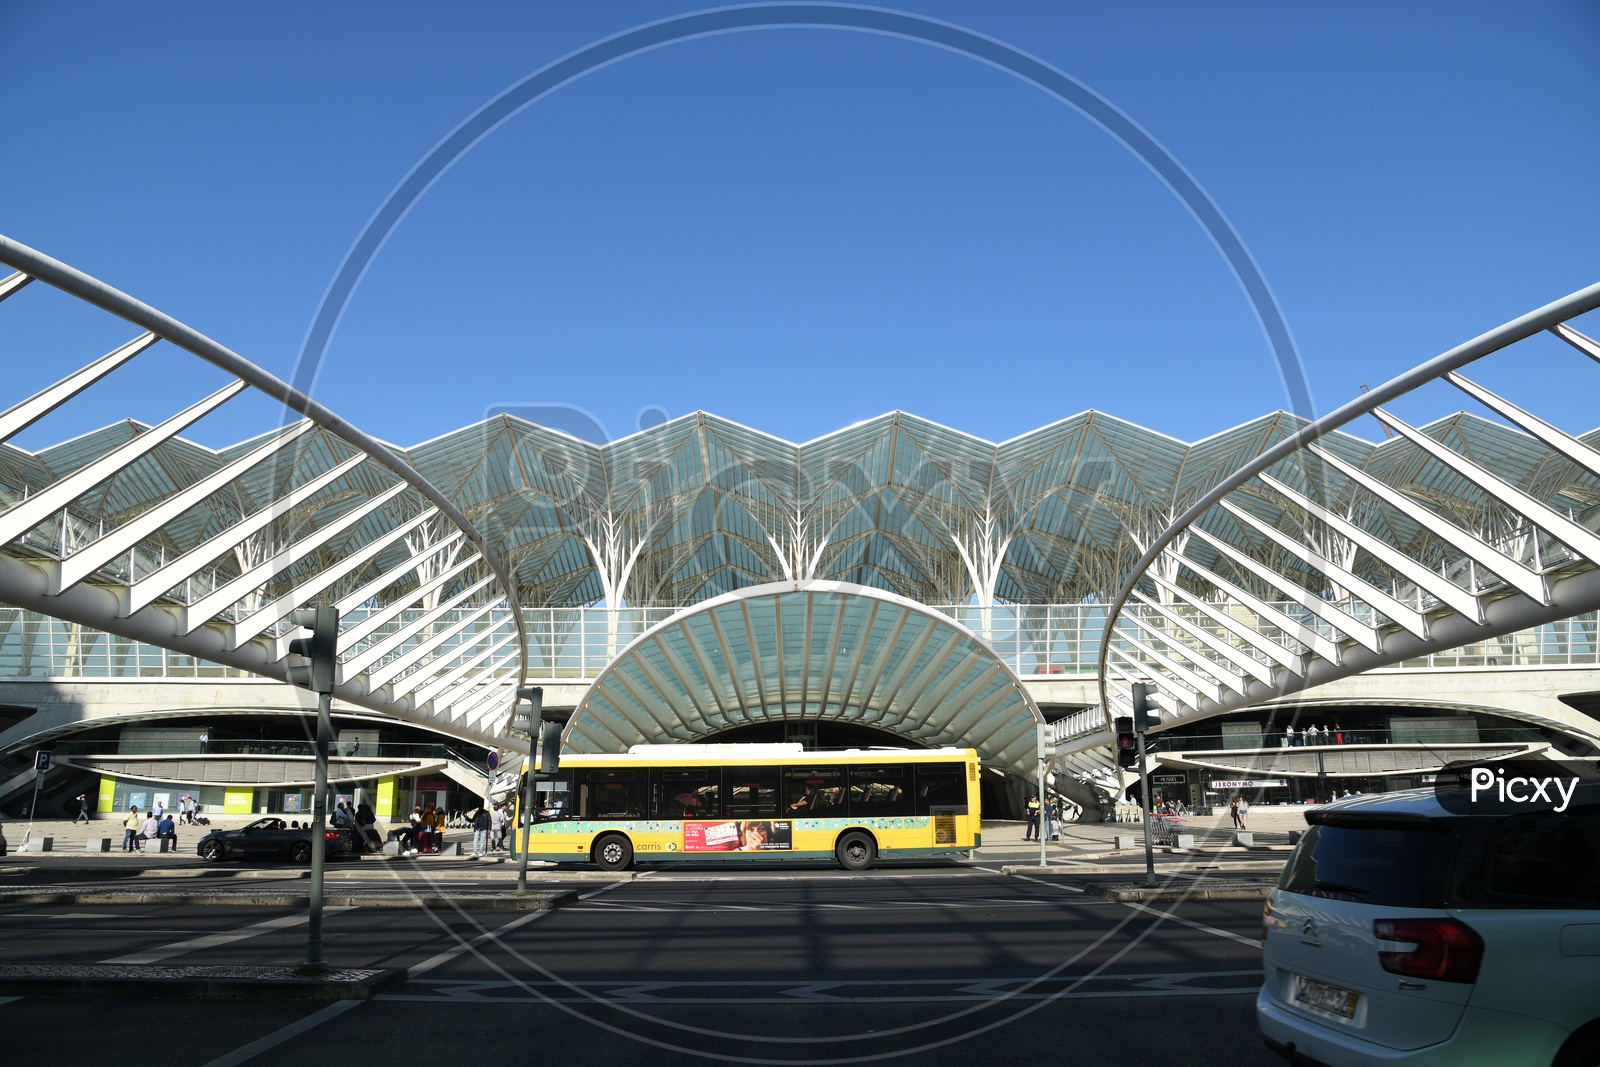 Gare do Oriente or the Lisbon Oriente Station  is the main Portuguese intermodal transport hubs in Lisbon